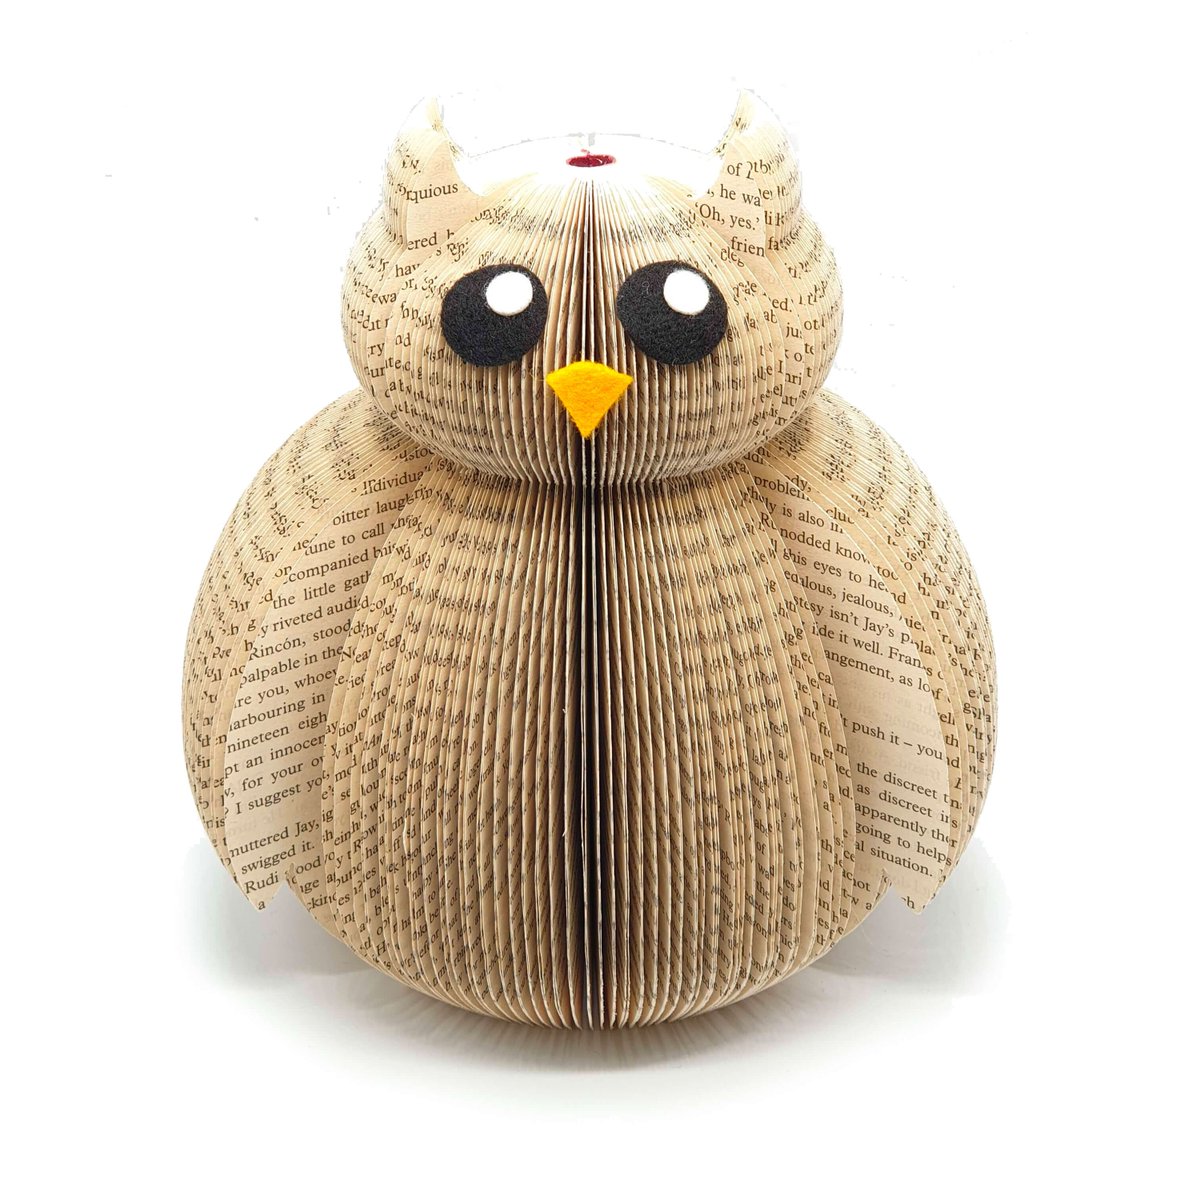 Owl Ornament - Owl Decor - Owl Gift - Paper Art -Paper Sculpture - paper cutting - Freestanding - Book Owl - Book Art - Owl Art creatoncrafts.etsy.com/listing/187100… #EpiconEtsy #Handmade #CreatonCrafts #MHHSBD #WomaninBiz #OwlBook